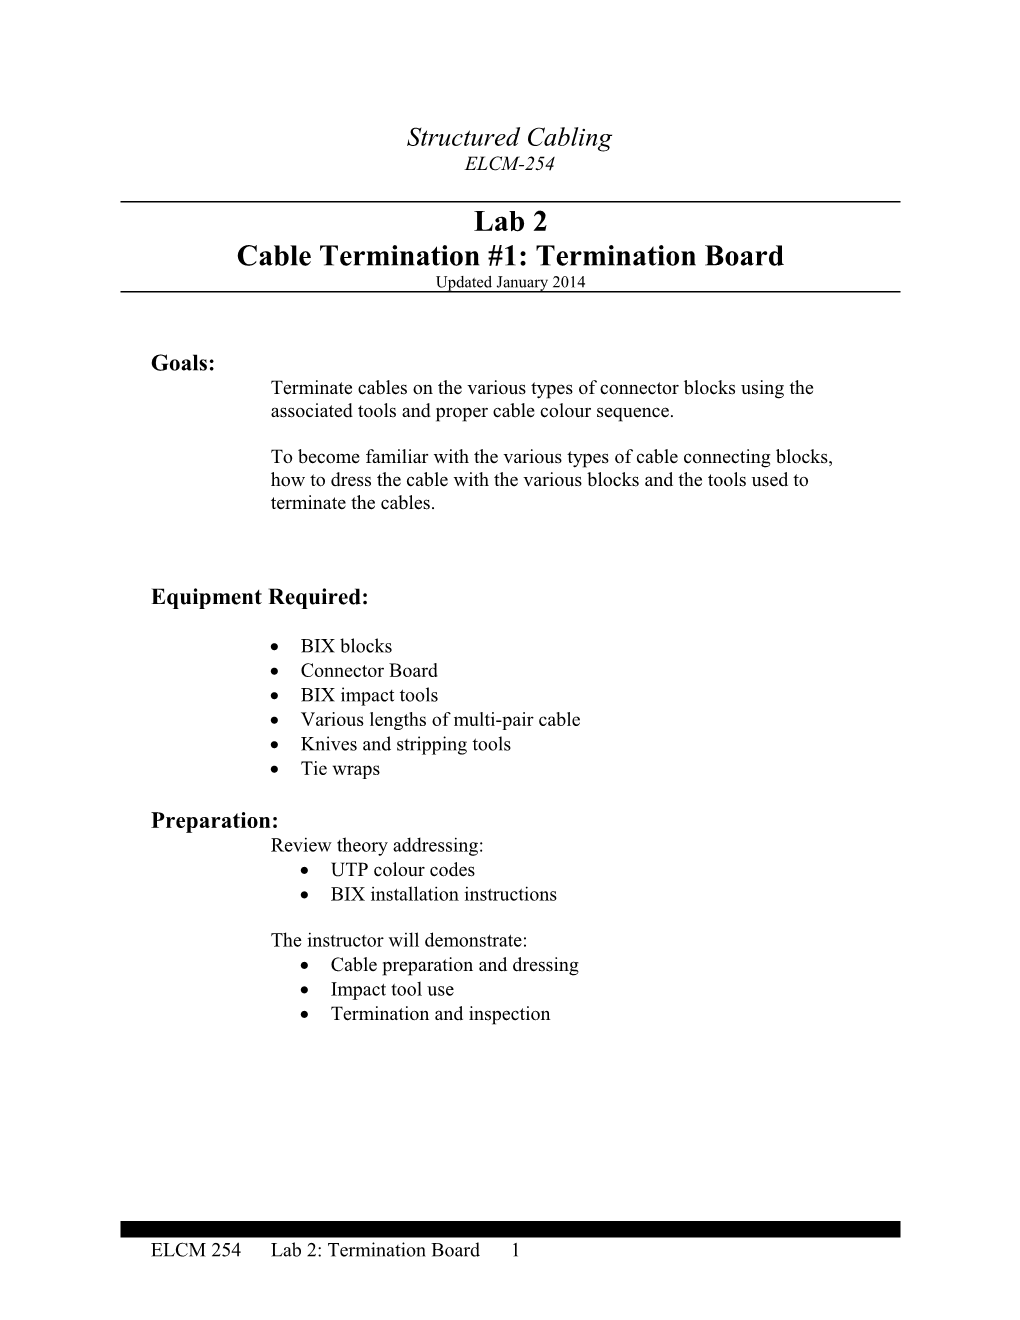 Cable Termination#1: Termination Board